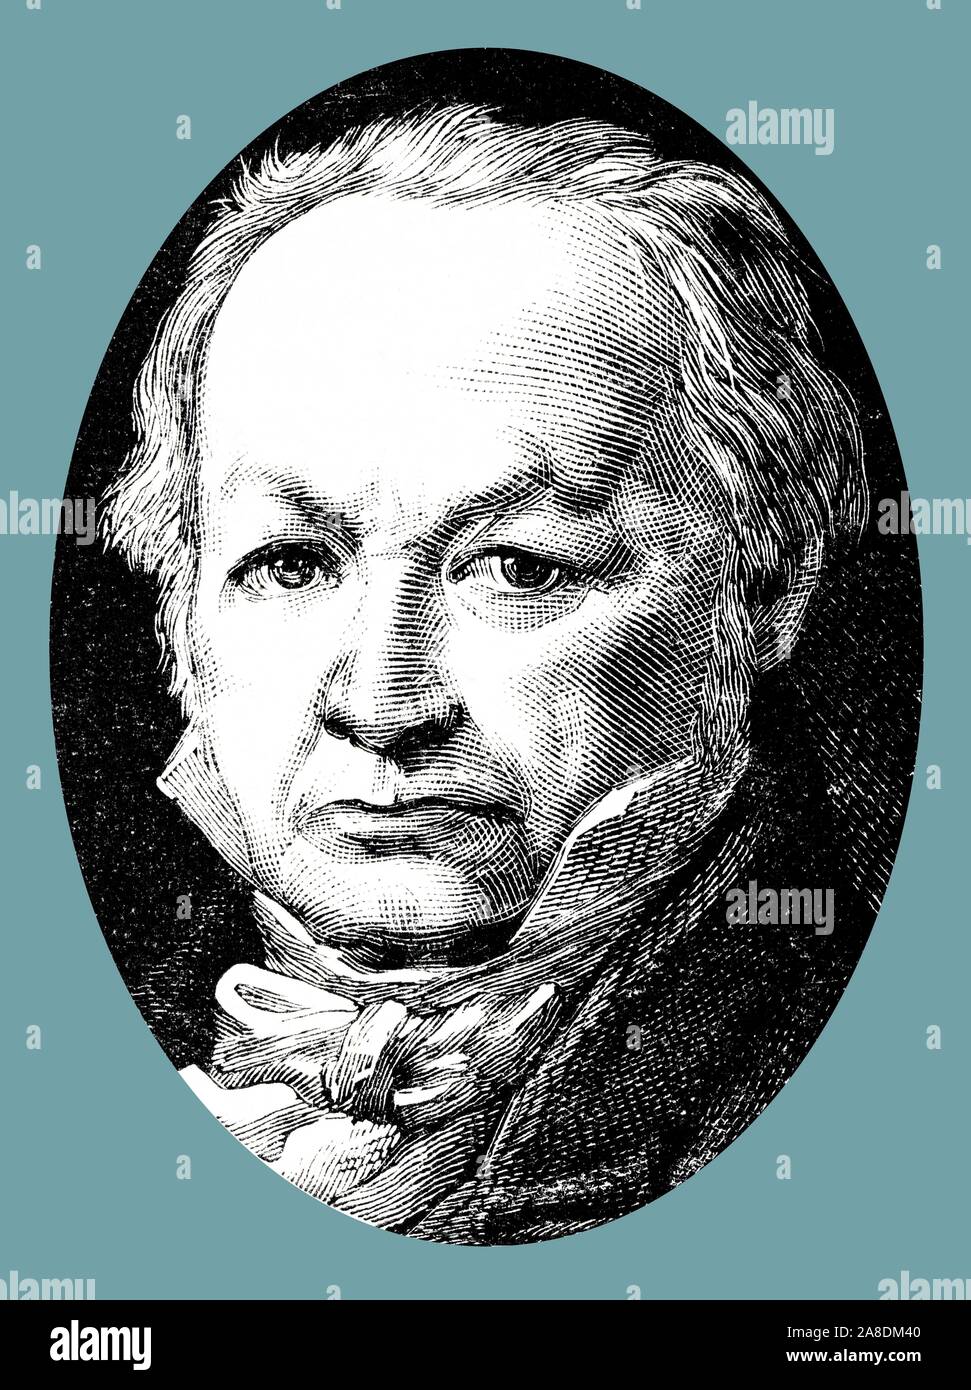 Francisco de Goya Lucientes (1746-1828), pintor y grabador español. La gravure de 1877. Banque D'Images